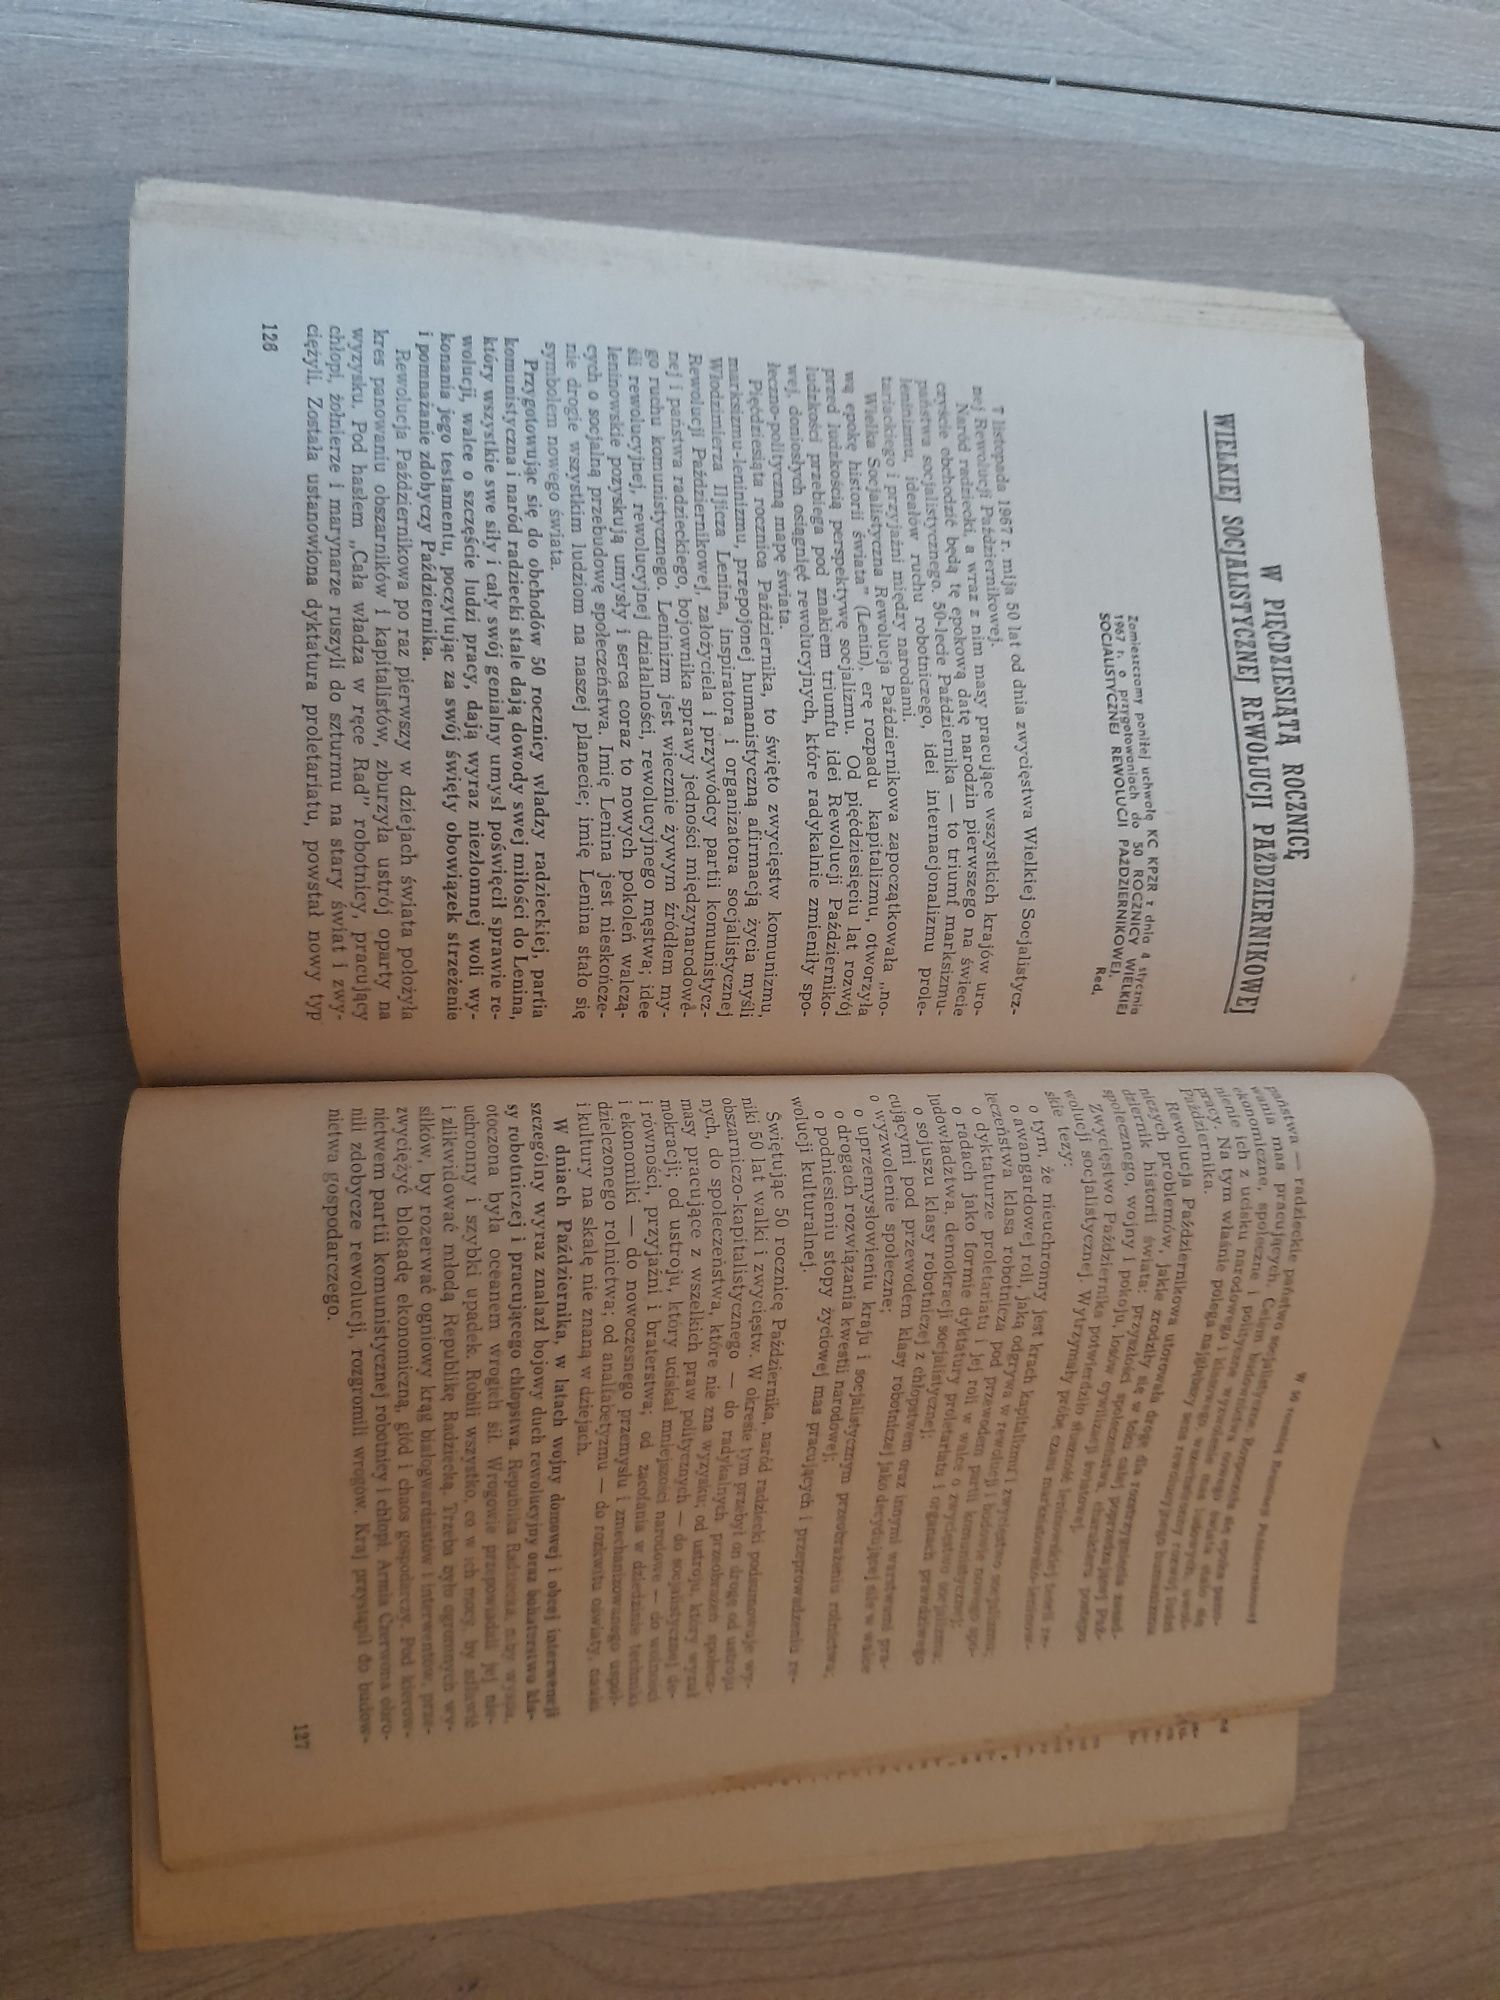 Nowe Drogi- stara książka 1967r.